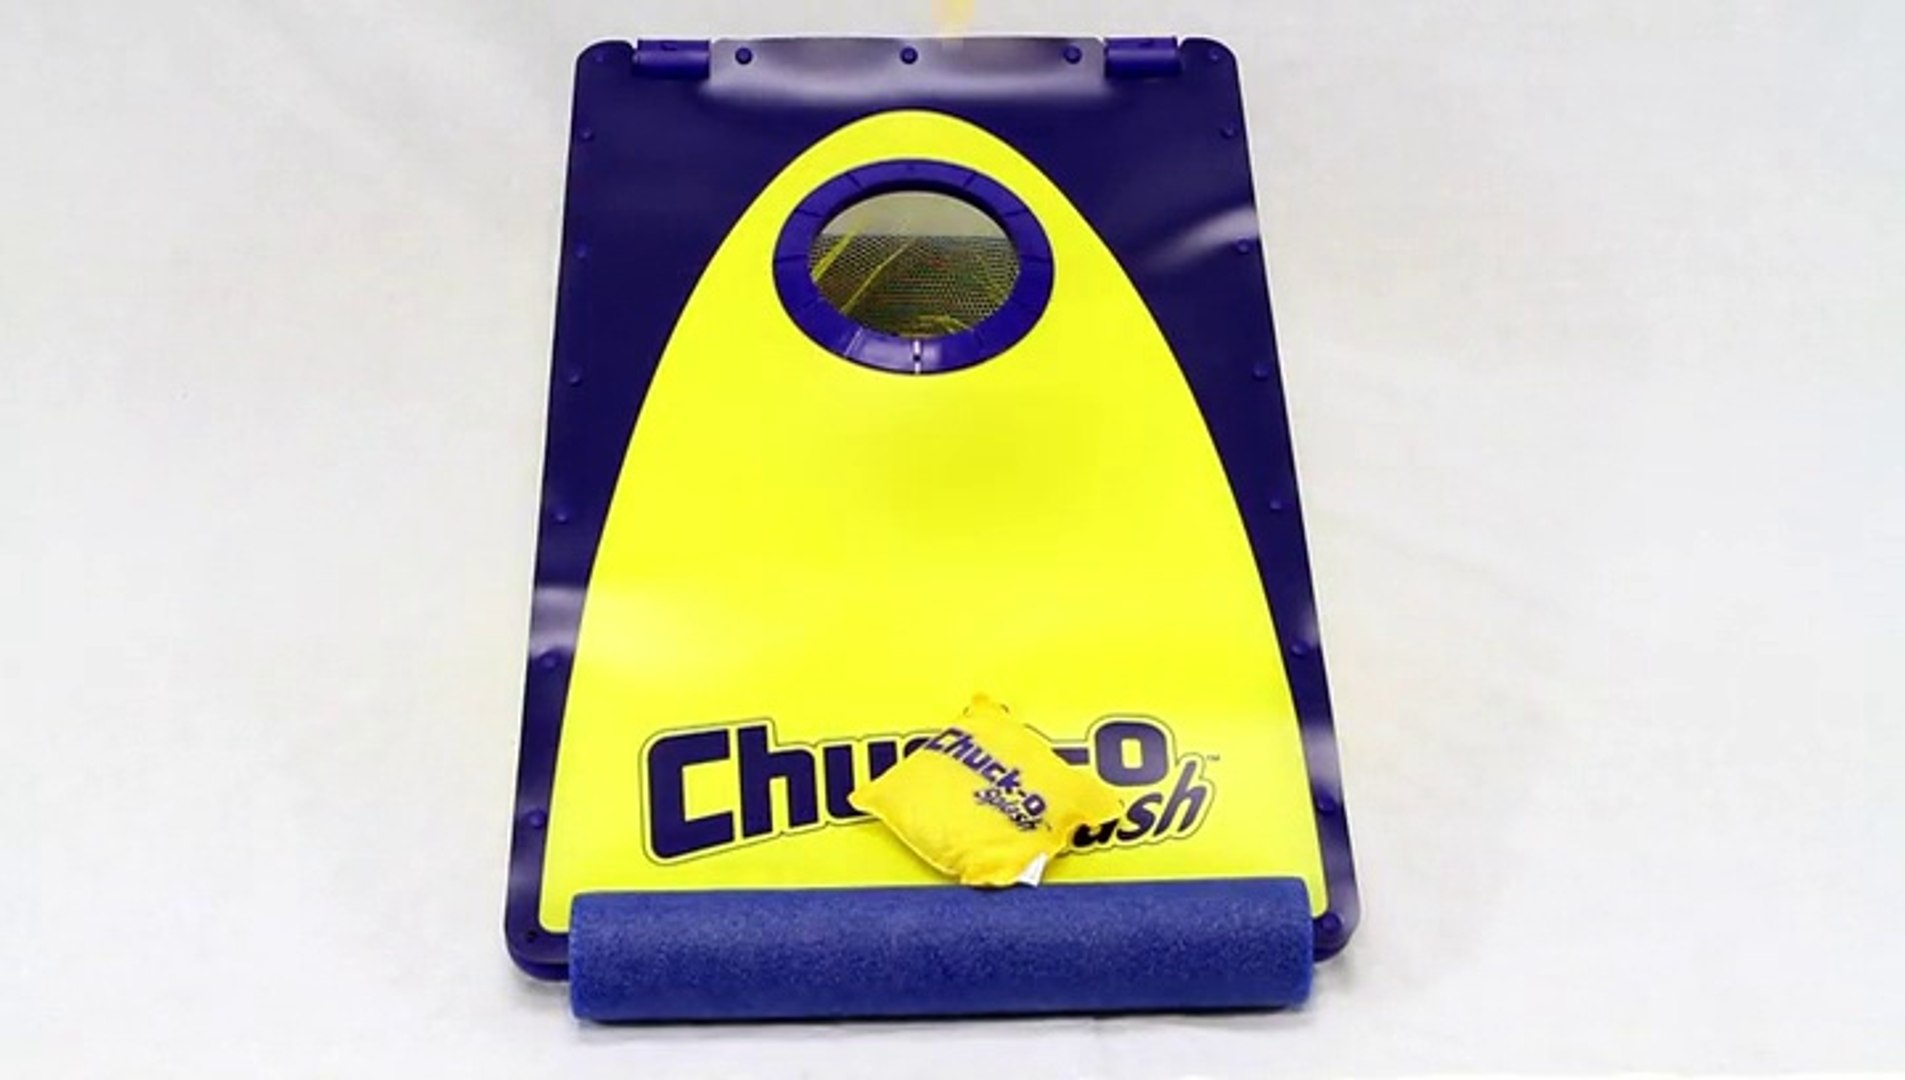 Slinky Chuck-O Splash Pool Beach Game Bag Tossing